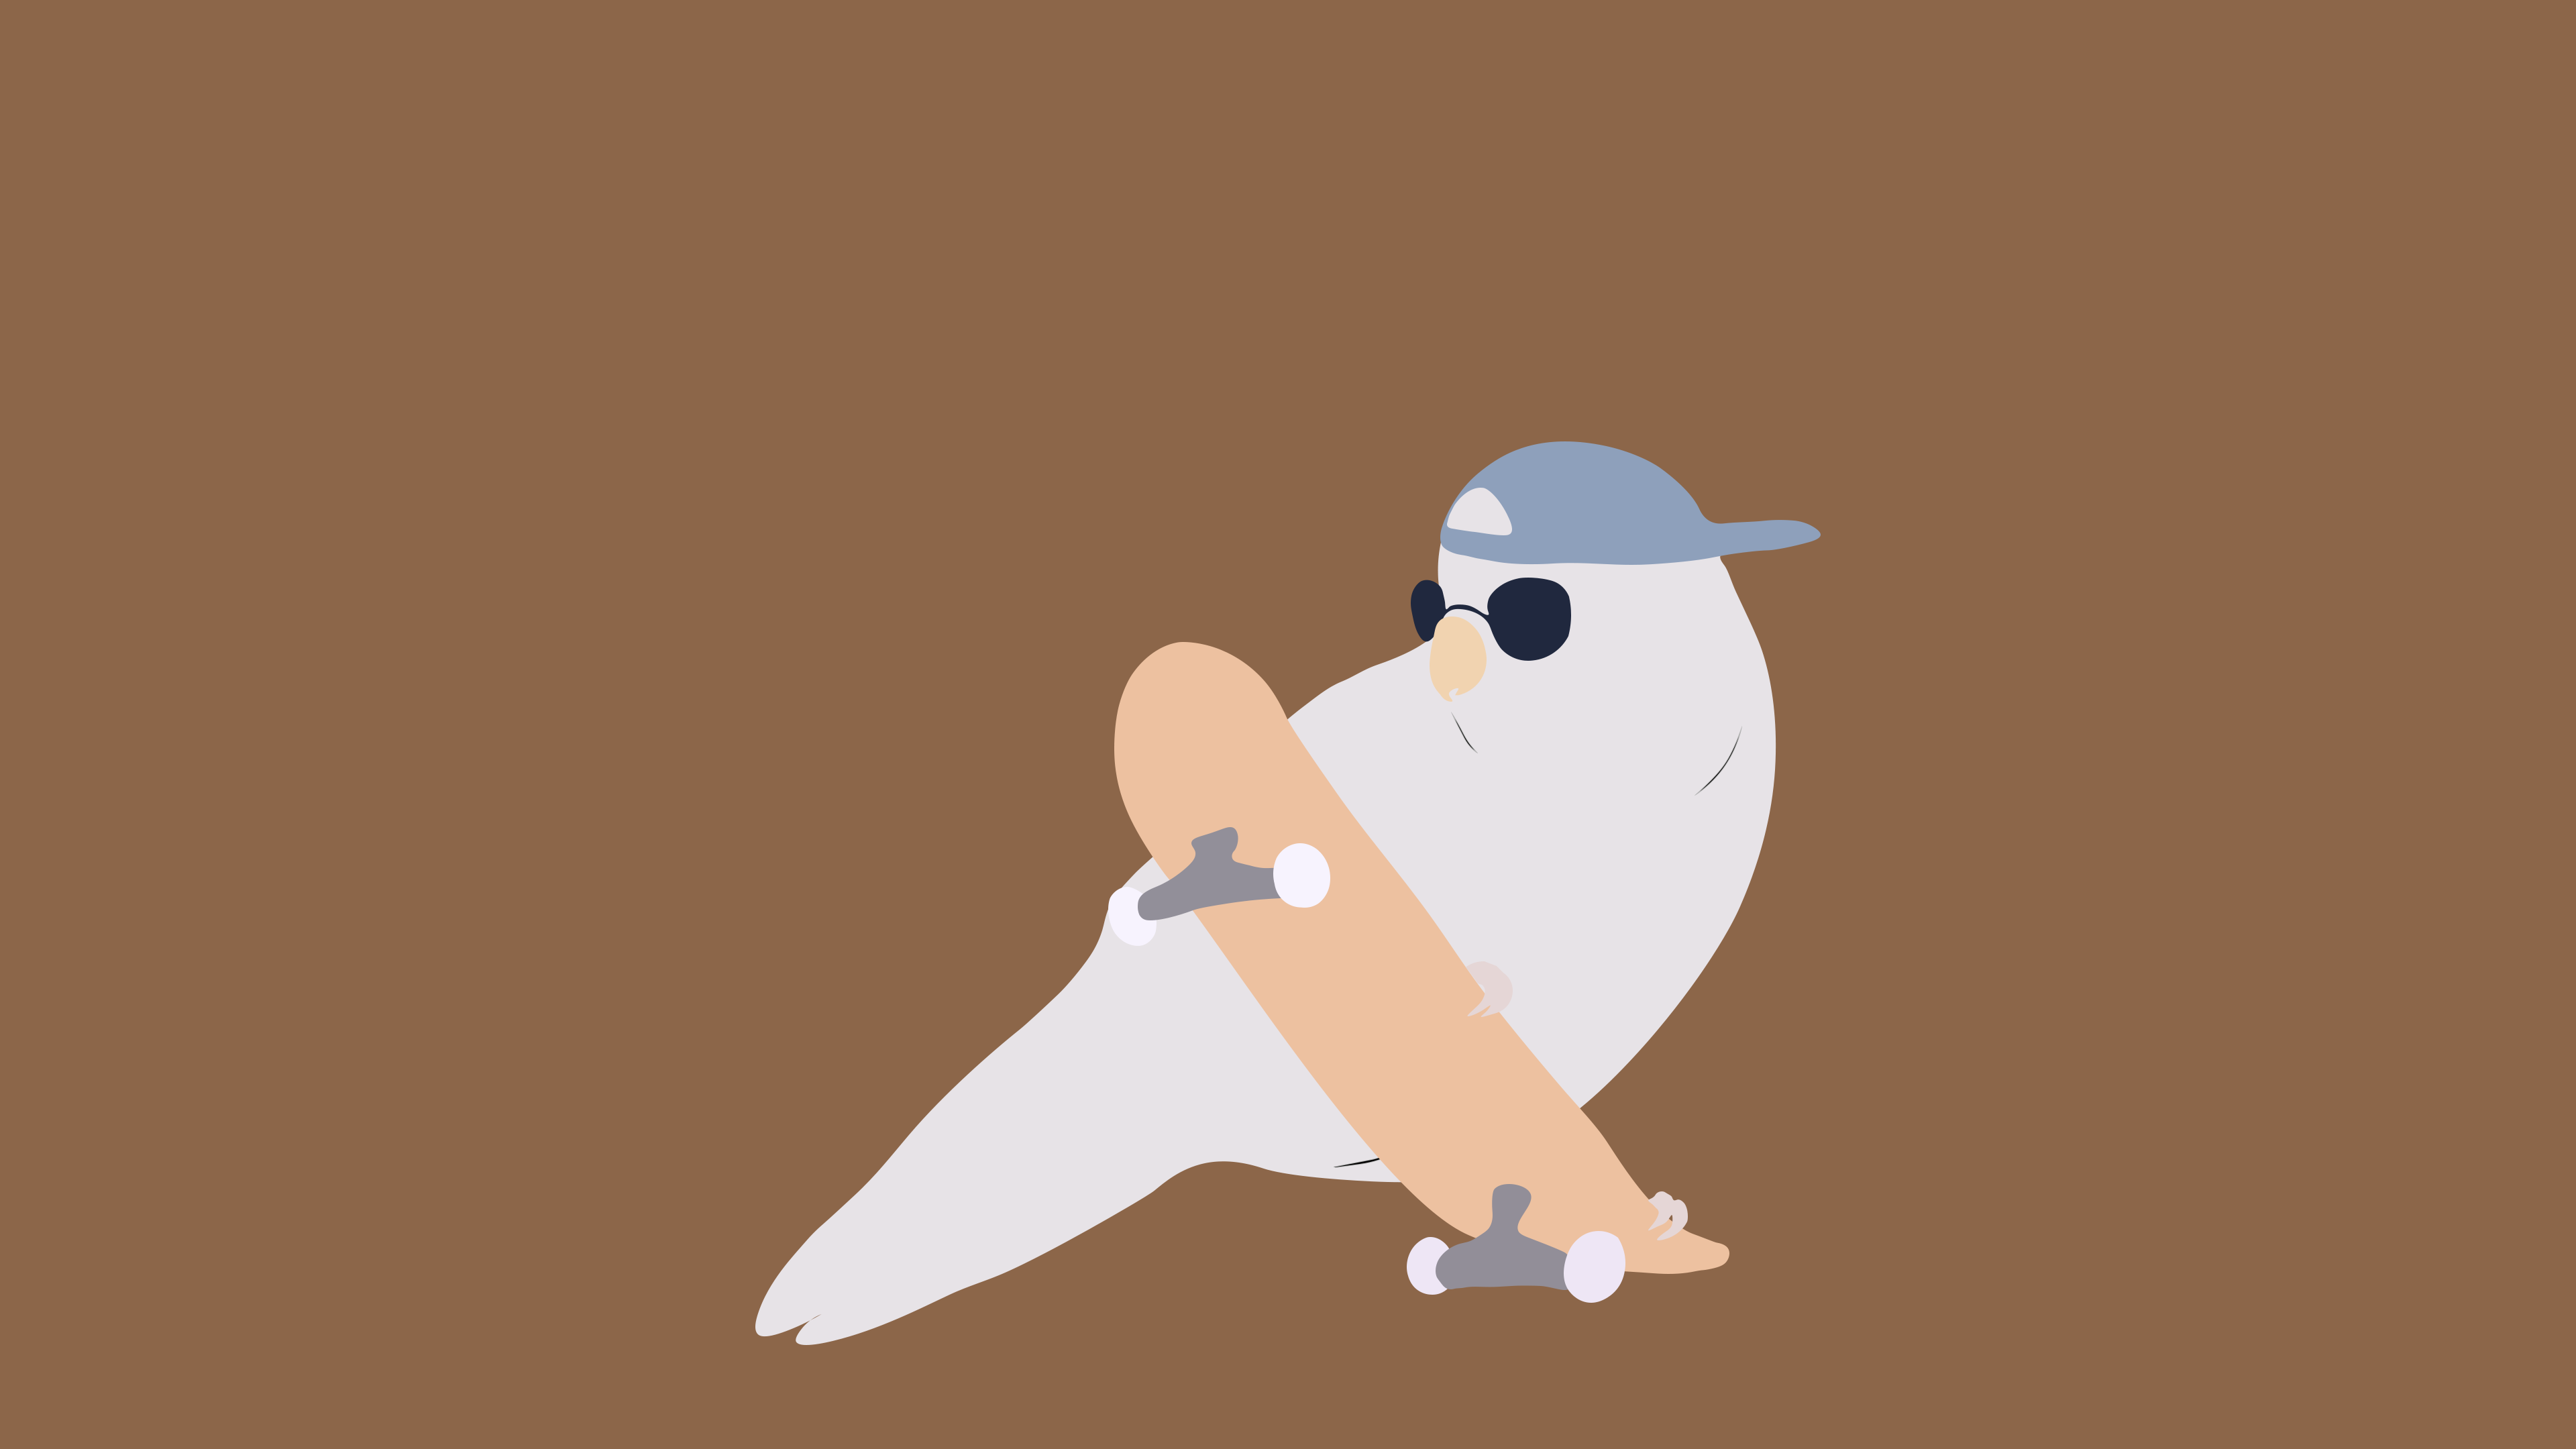 General 3840x2160 minimalism skateboard simple background pidgeons birds